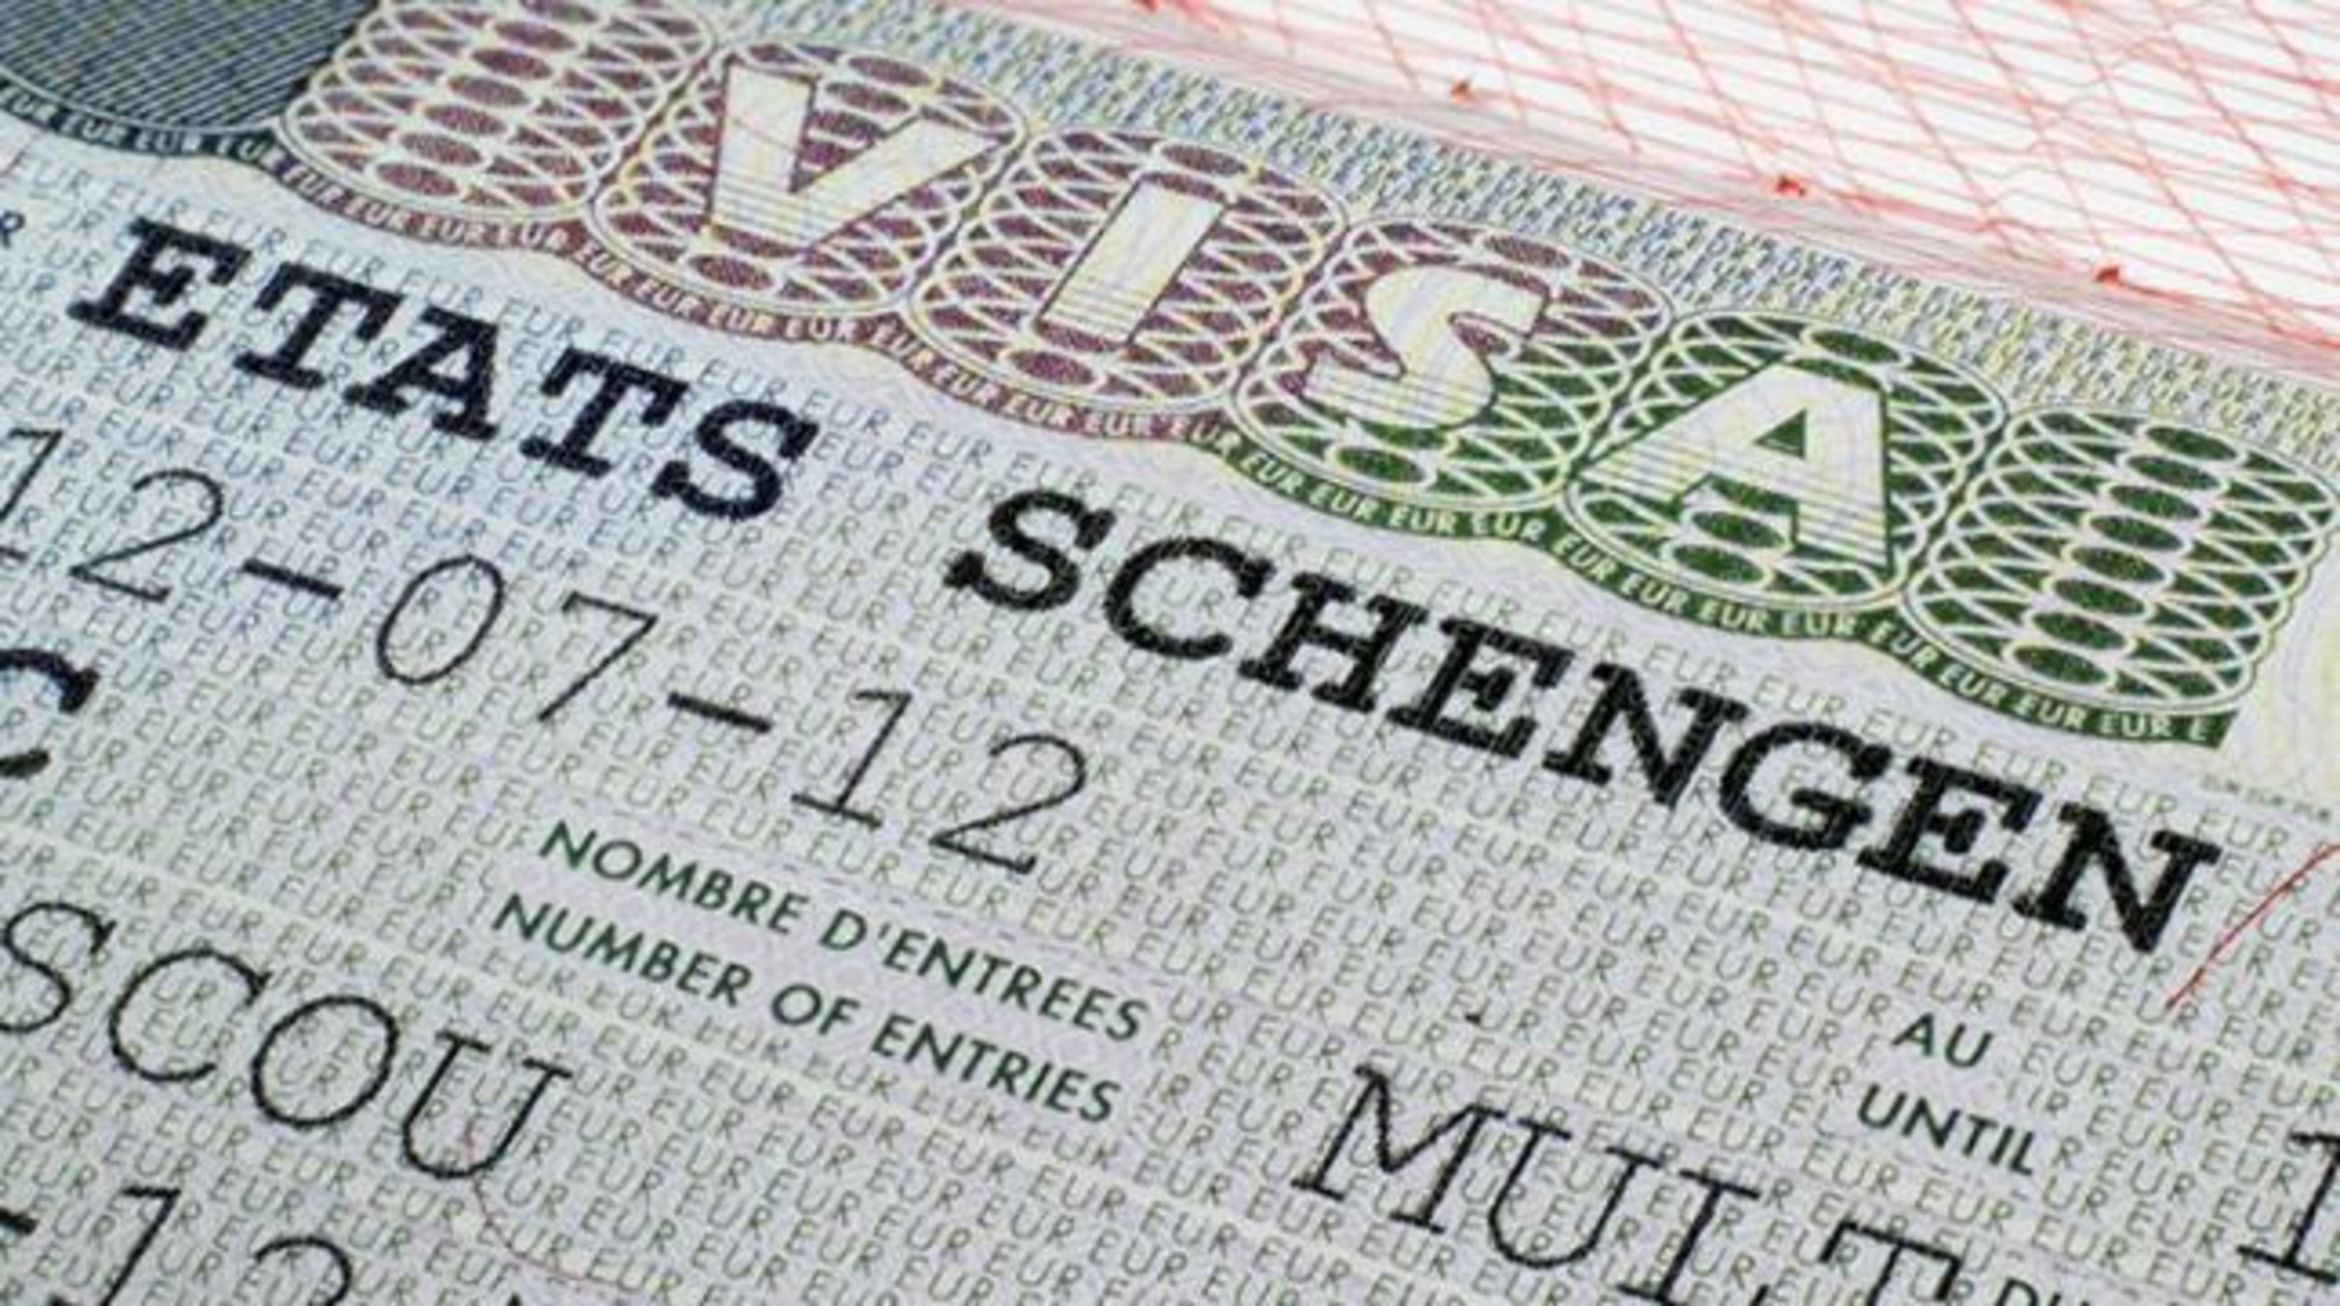 schengen-visa-document